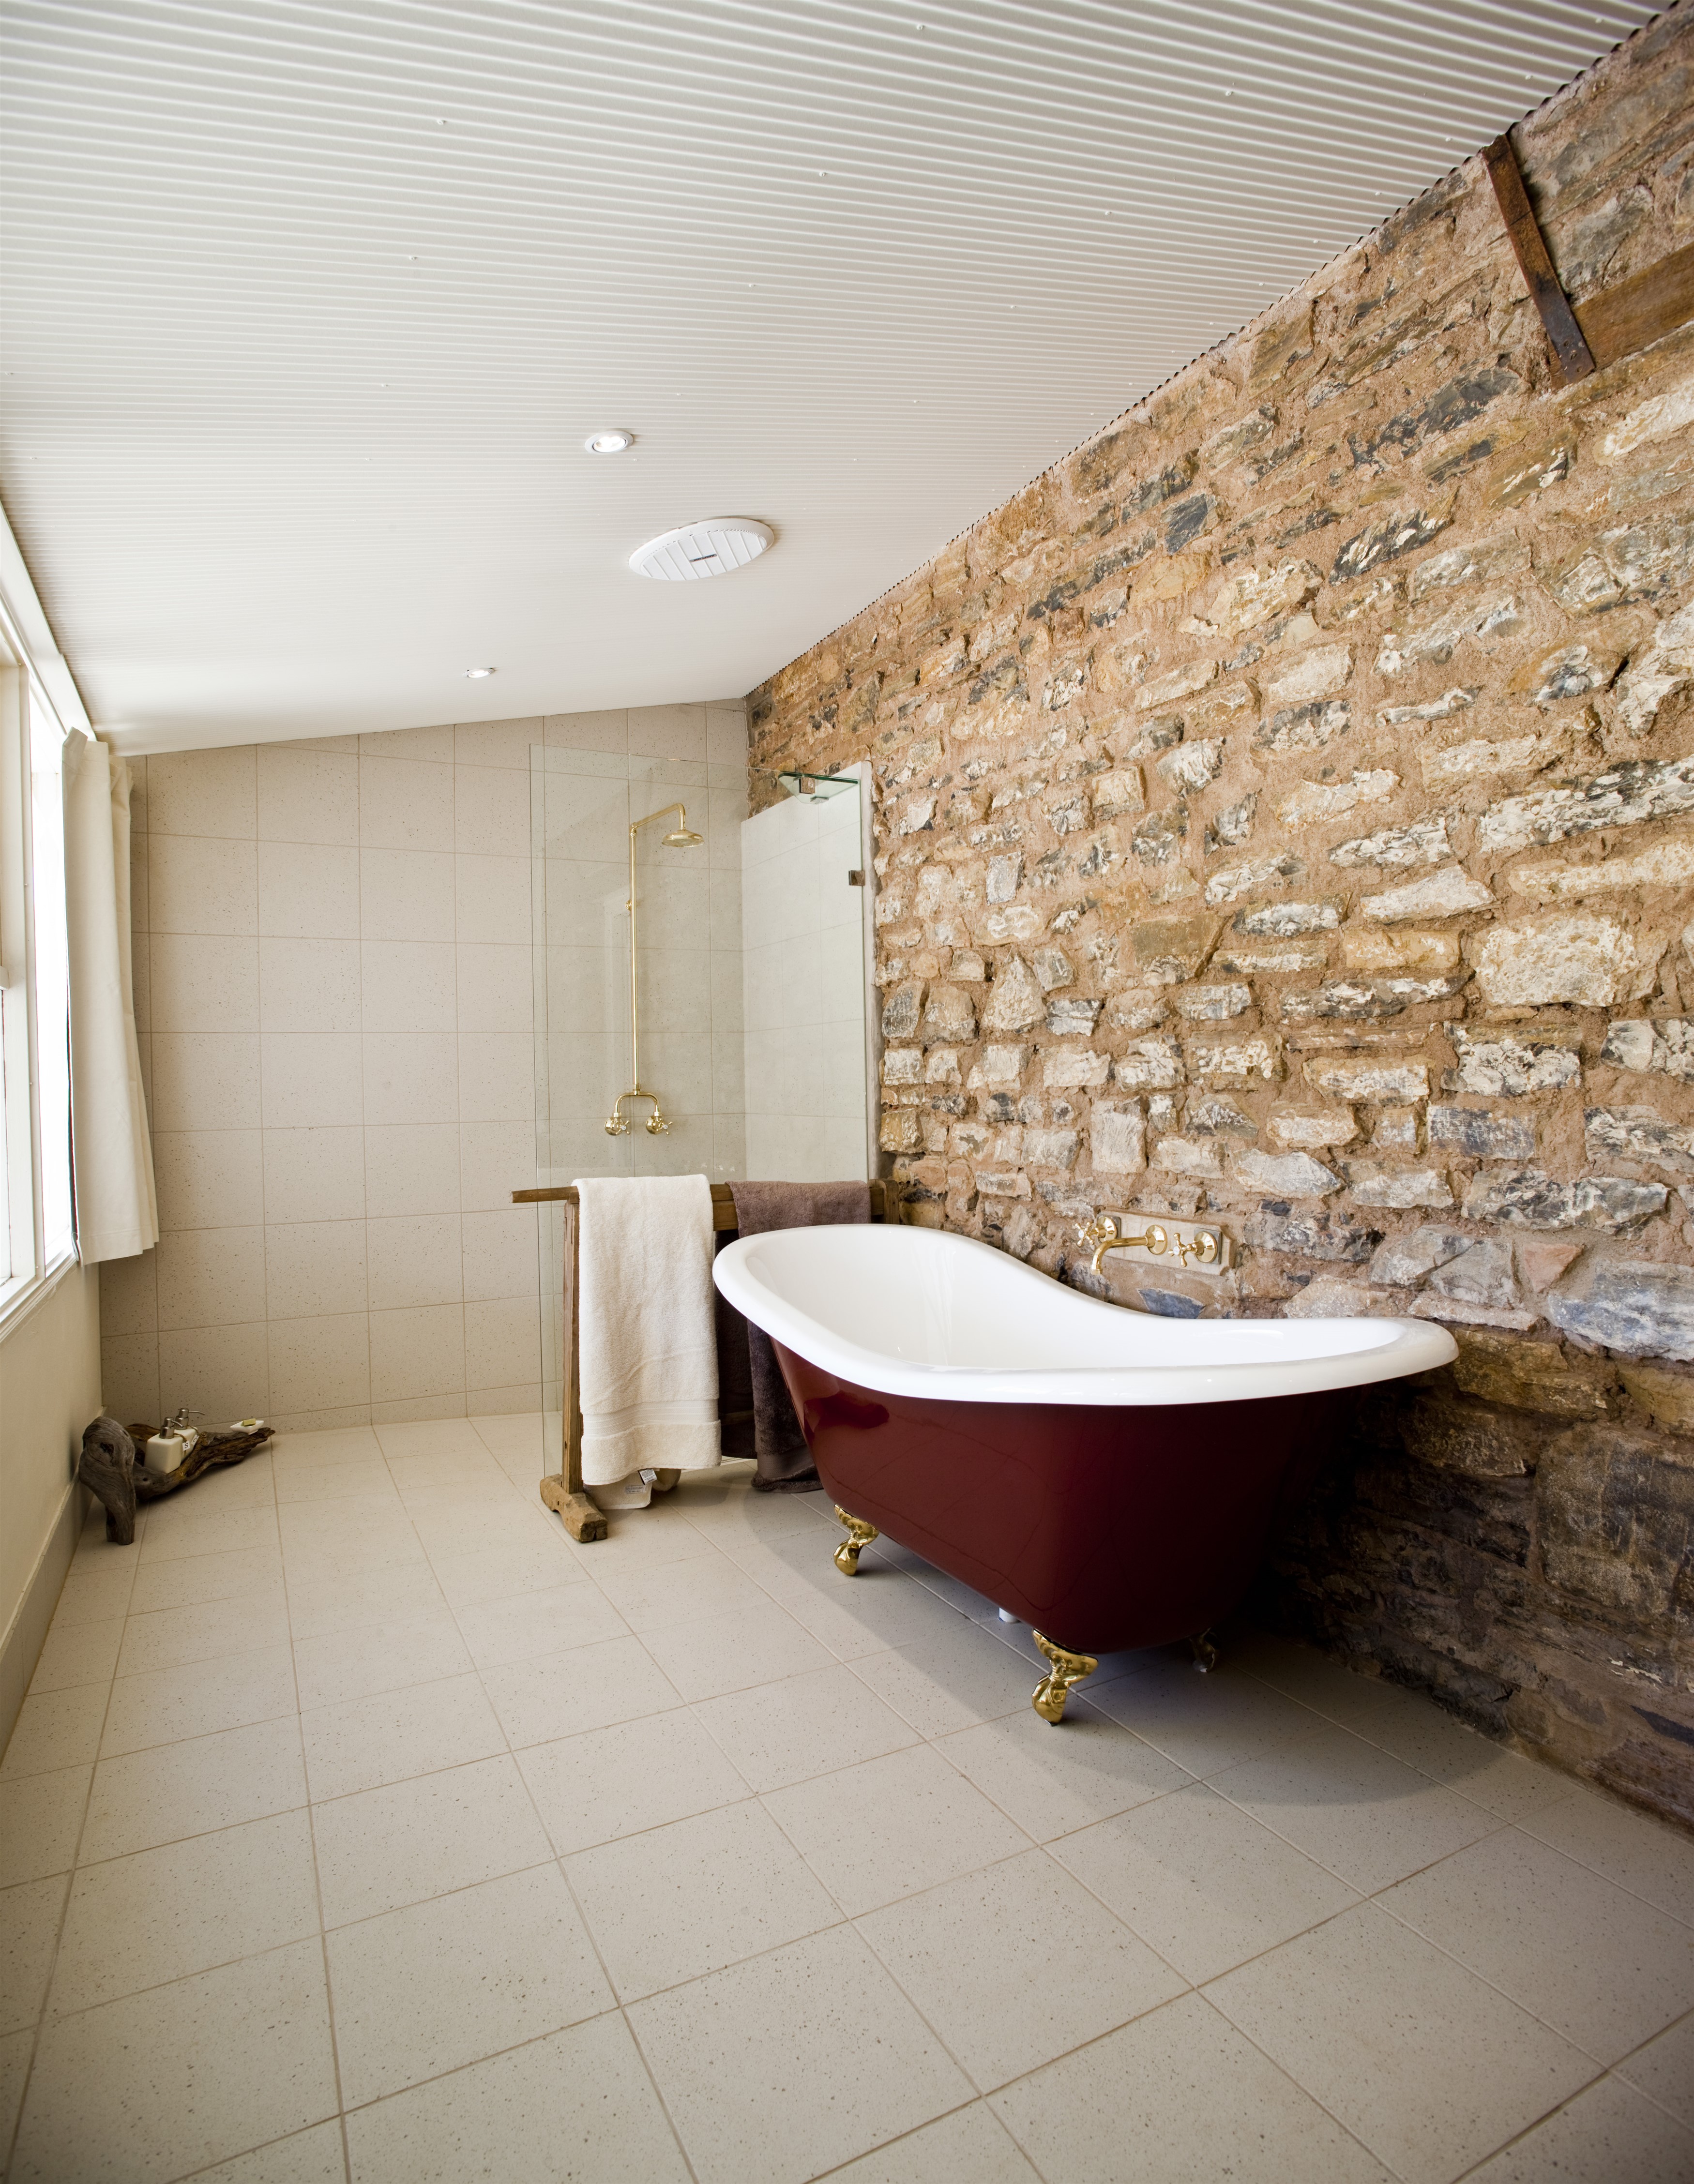 Arkaba_Flinders-Ranges_Bathroom-Internal - Click to view larger version